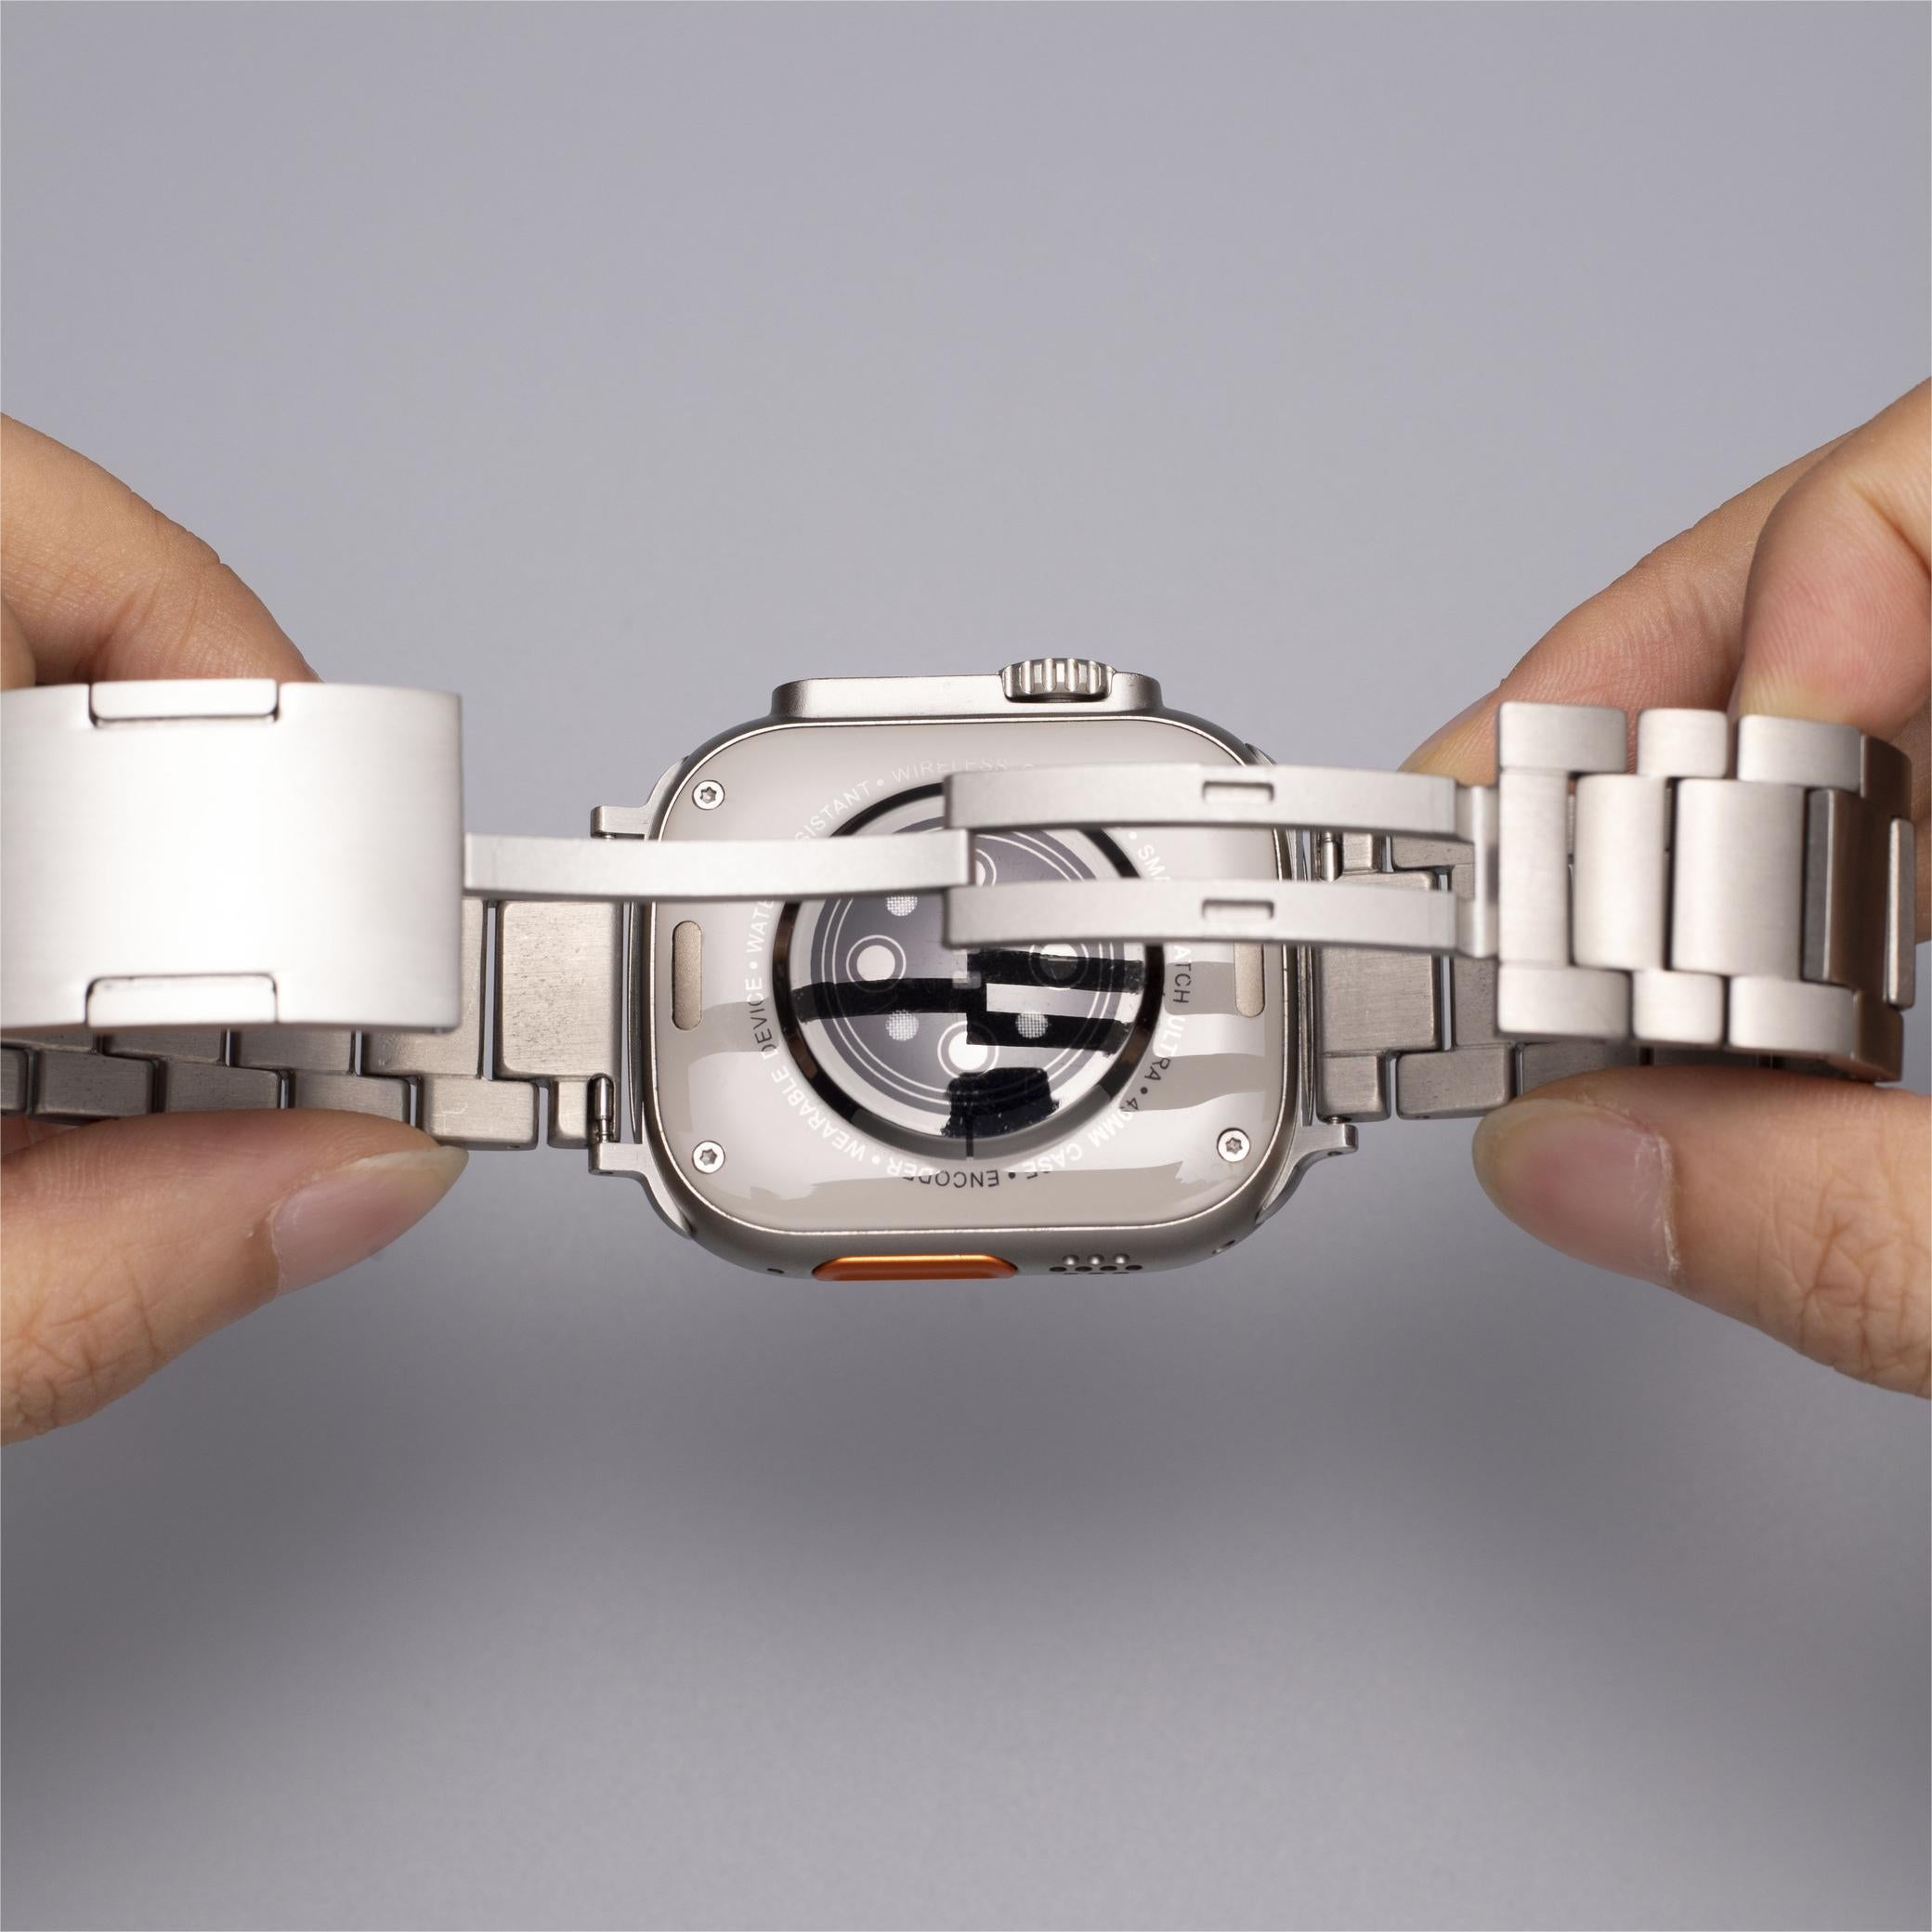 Titanium Link Bracelet Band for Apple Watch